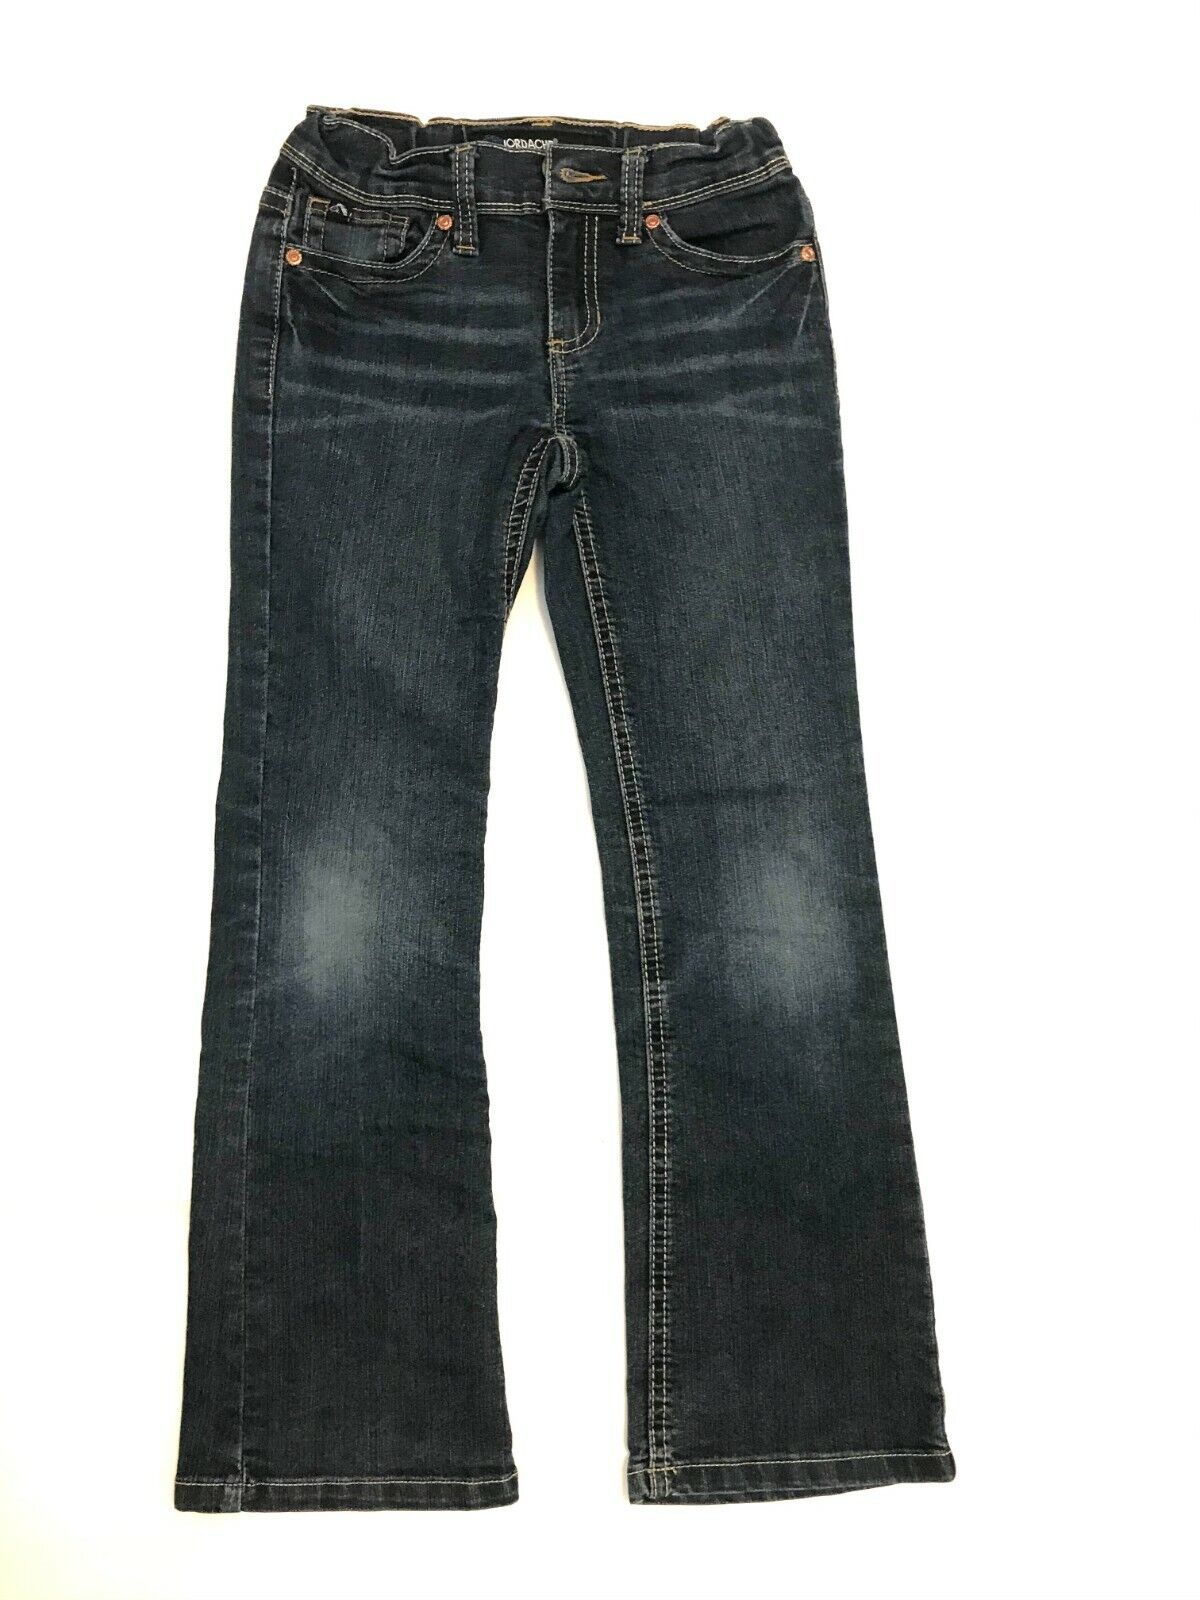 Girl's Regular Fit Boot Cut Jeans By Jordache 5-Pocket Dark Blue Denim Size 7 - $6.61